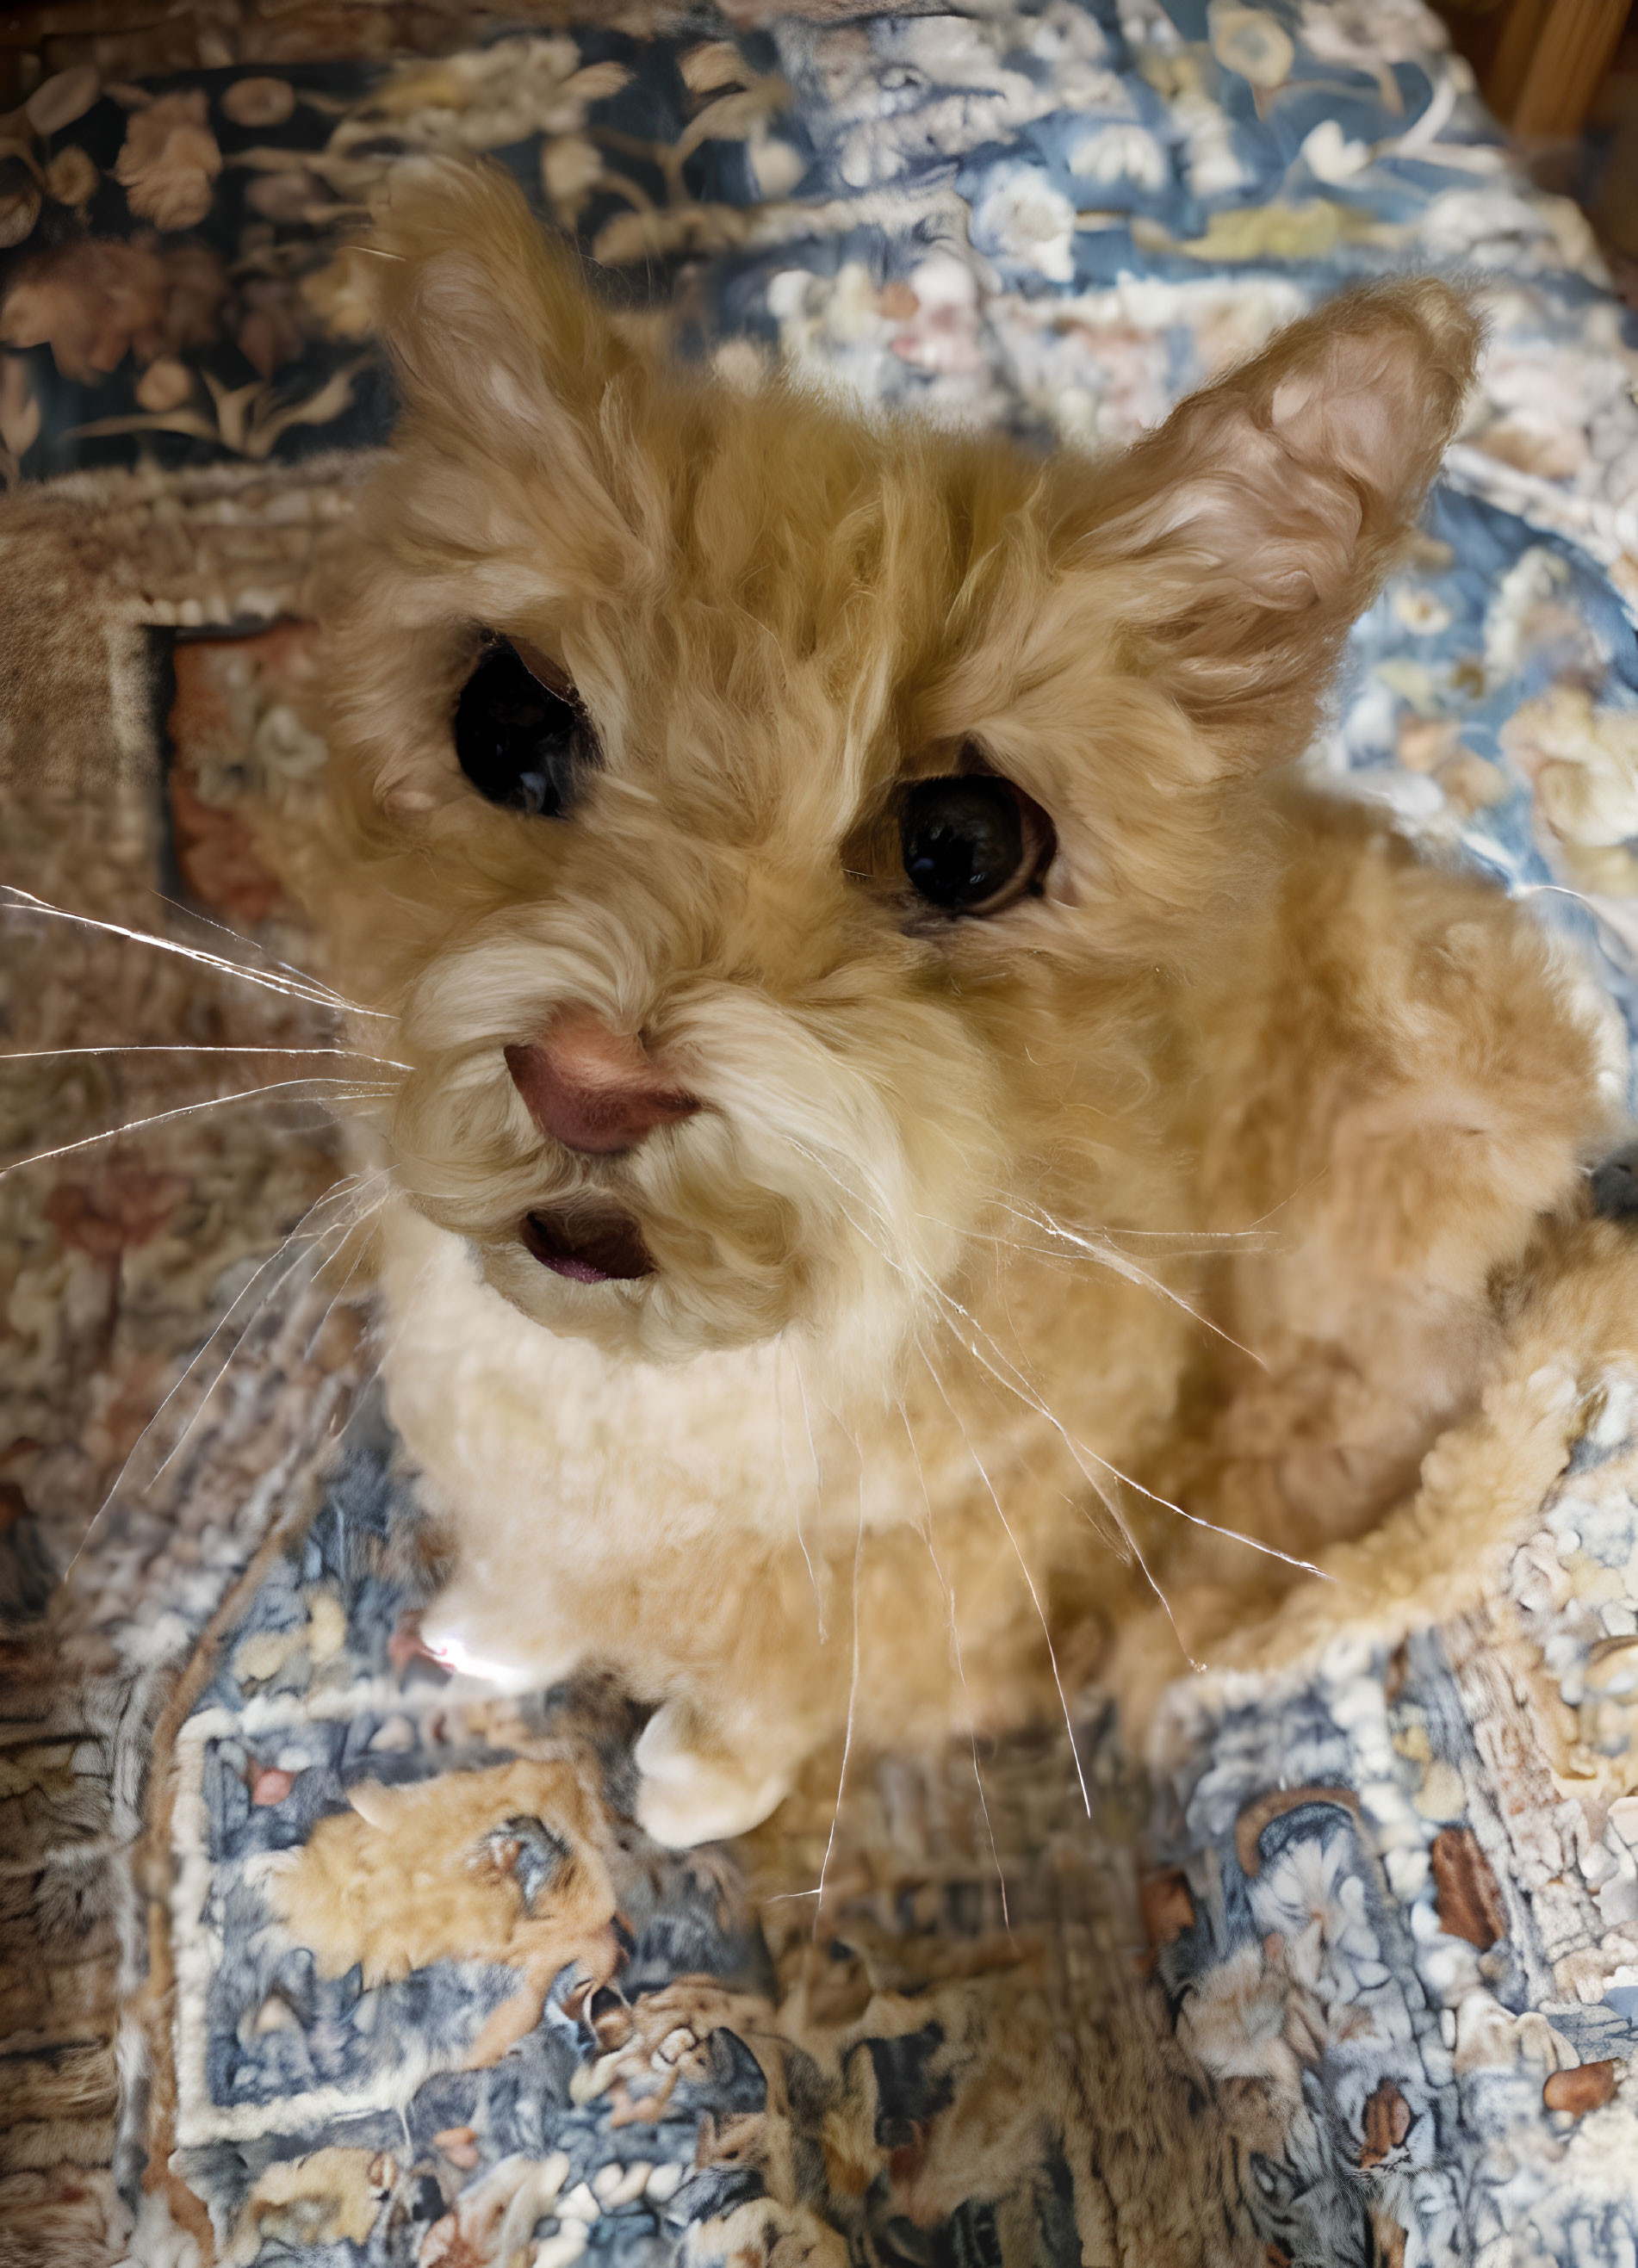 Hybrid creature: cat body, teddy bear head, large eyes, pink tongue, on pattern